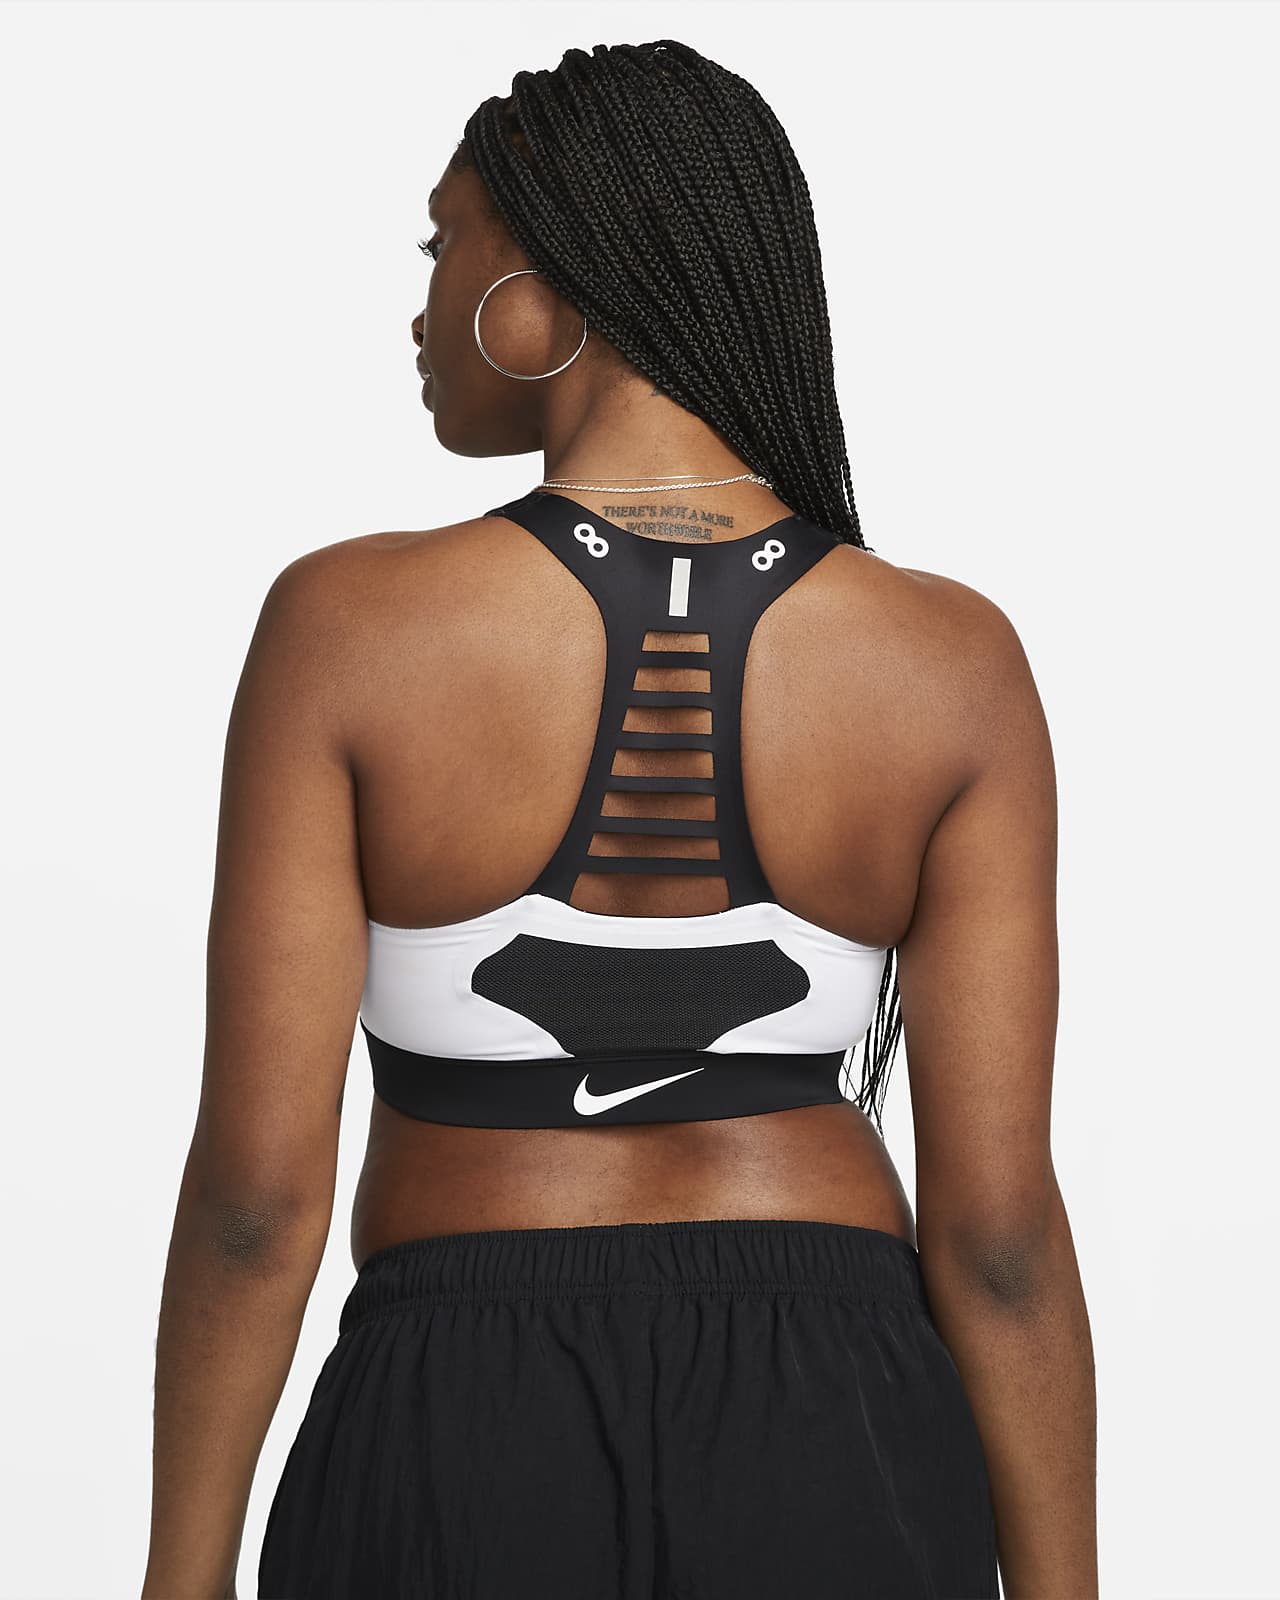 Nike Air sports bra size M